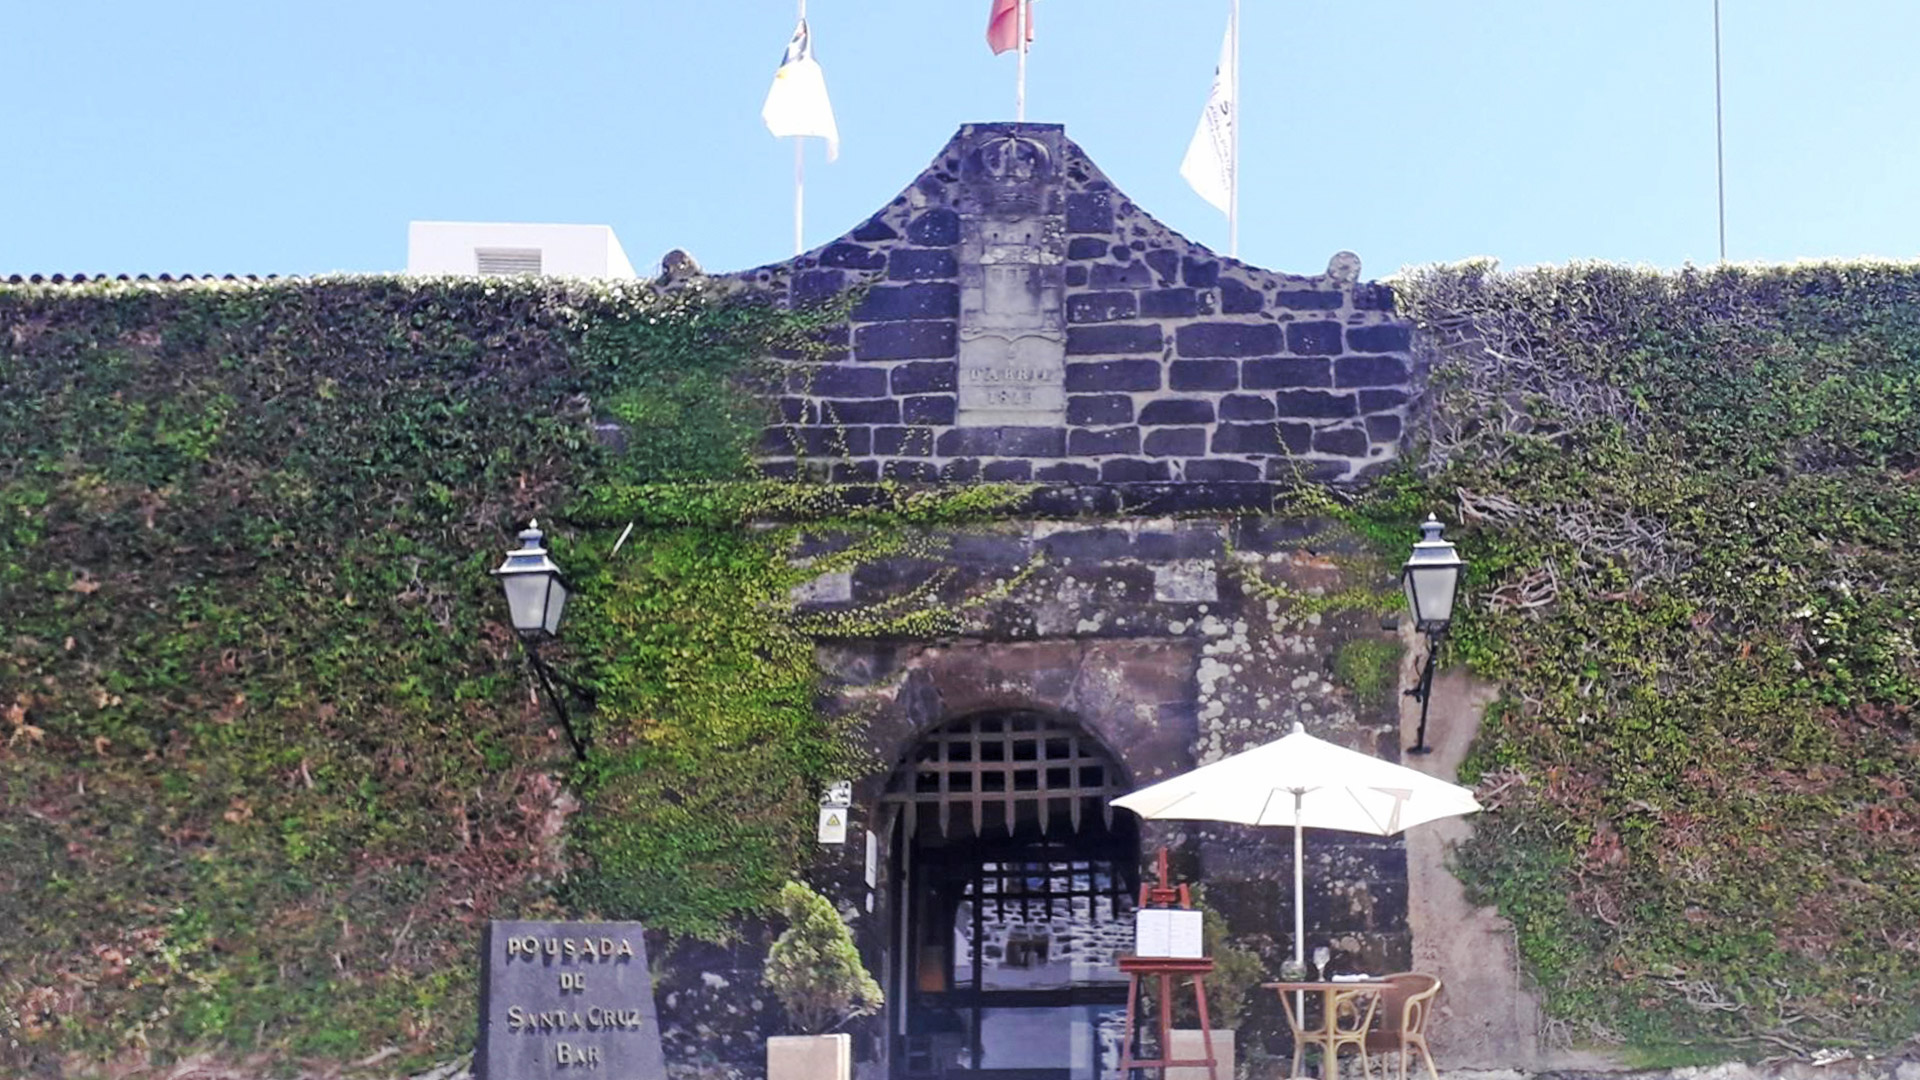 Pousada do Forte de Santa Cruz da Horta